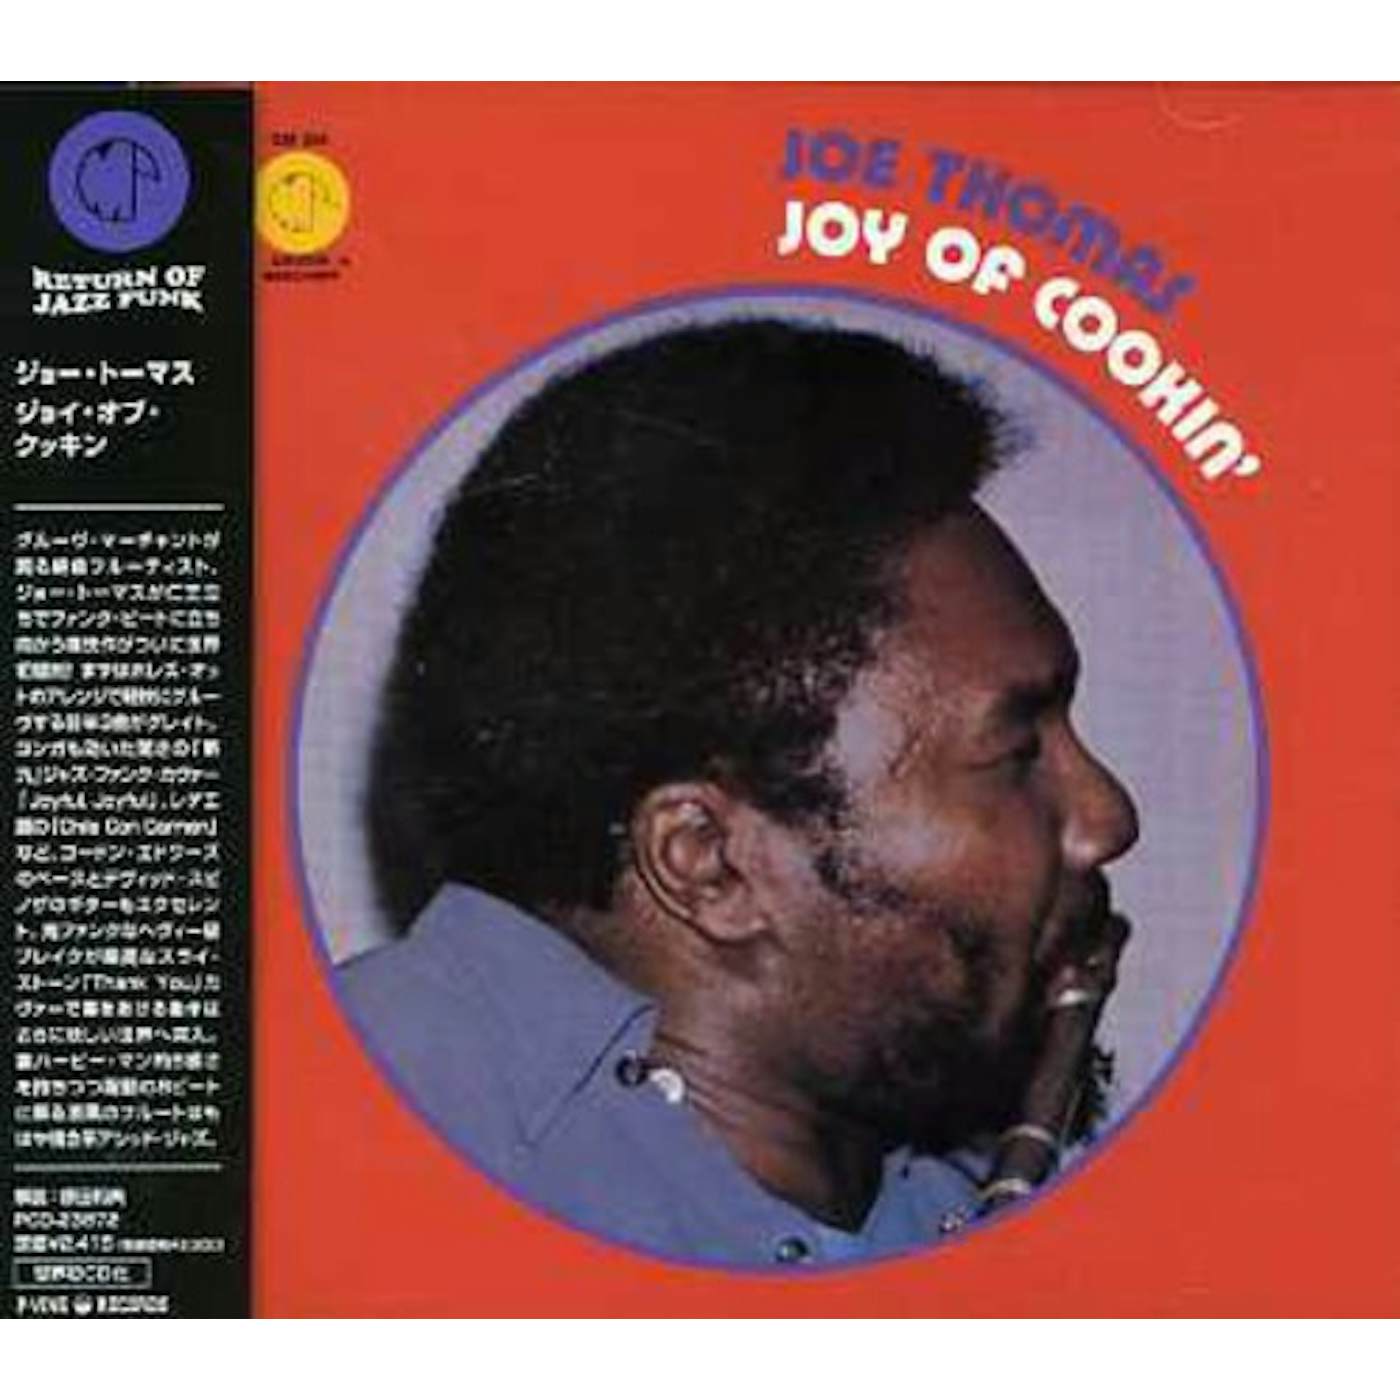 Joe Thomas JOY OF COOKIN' CD